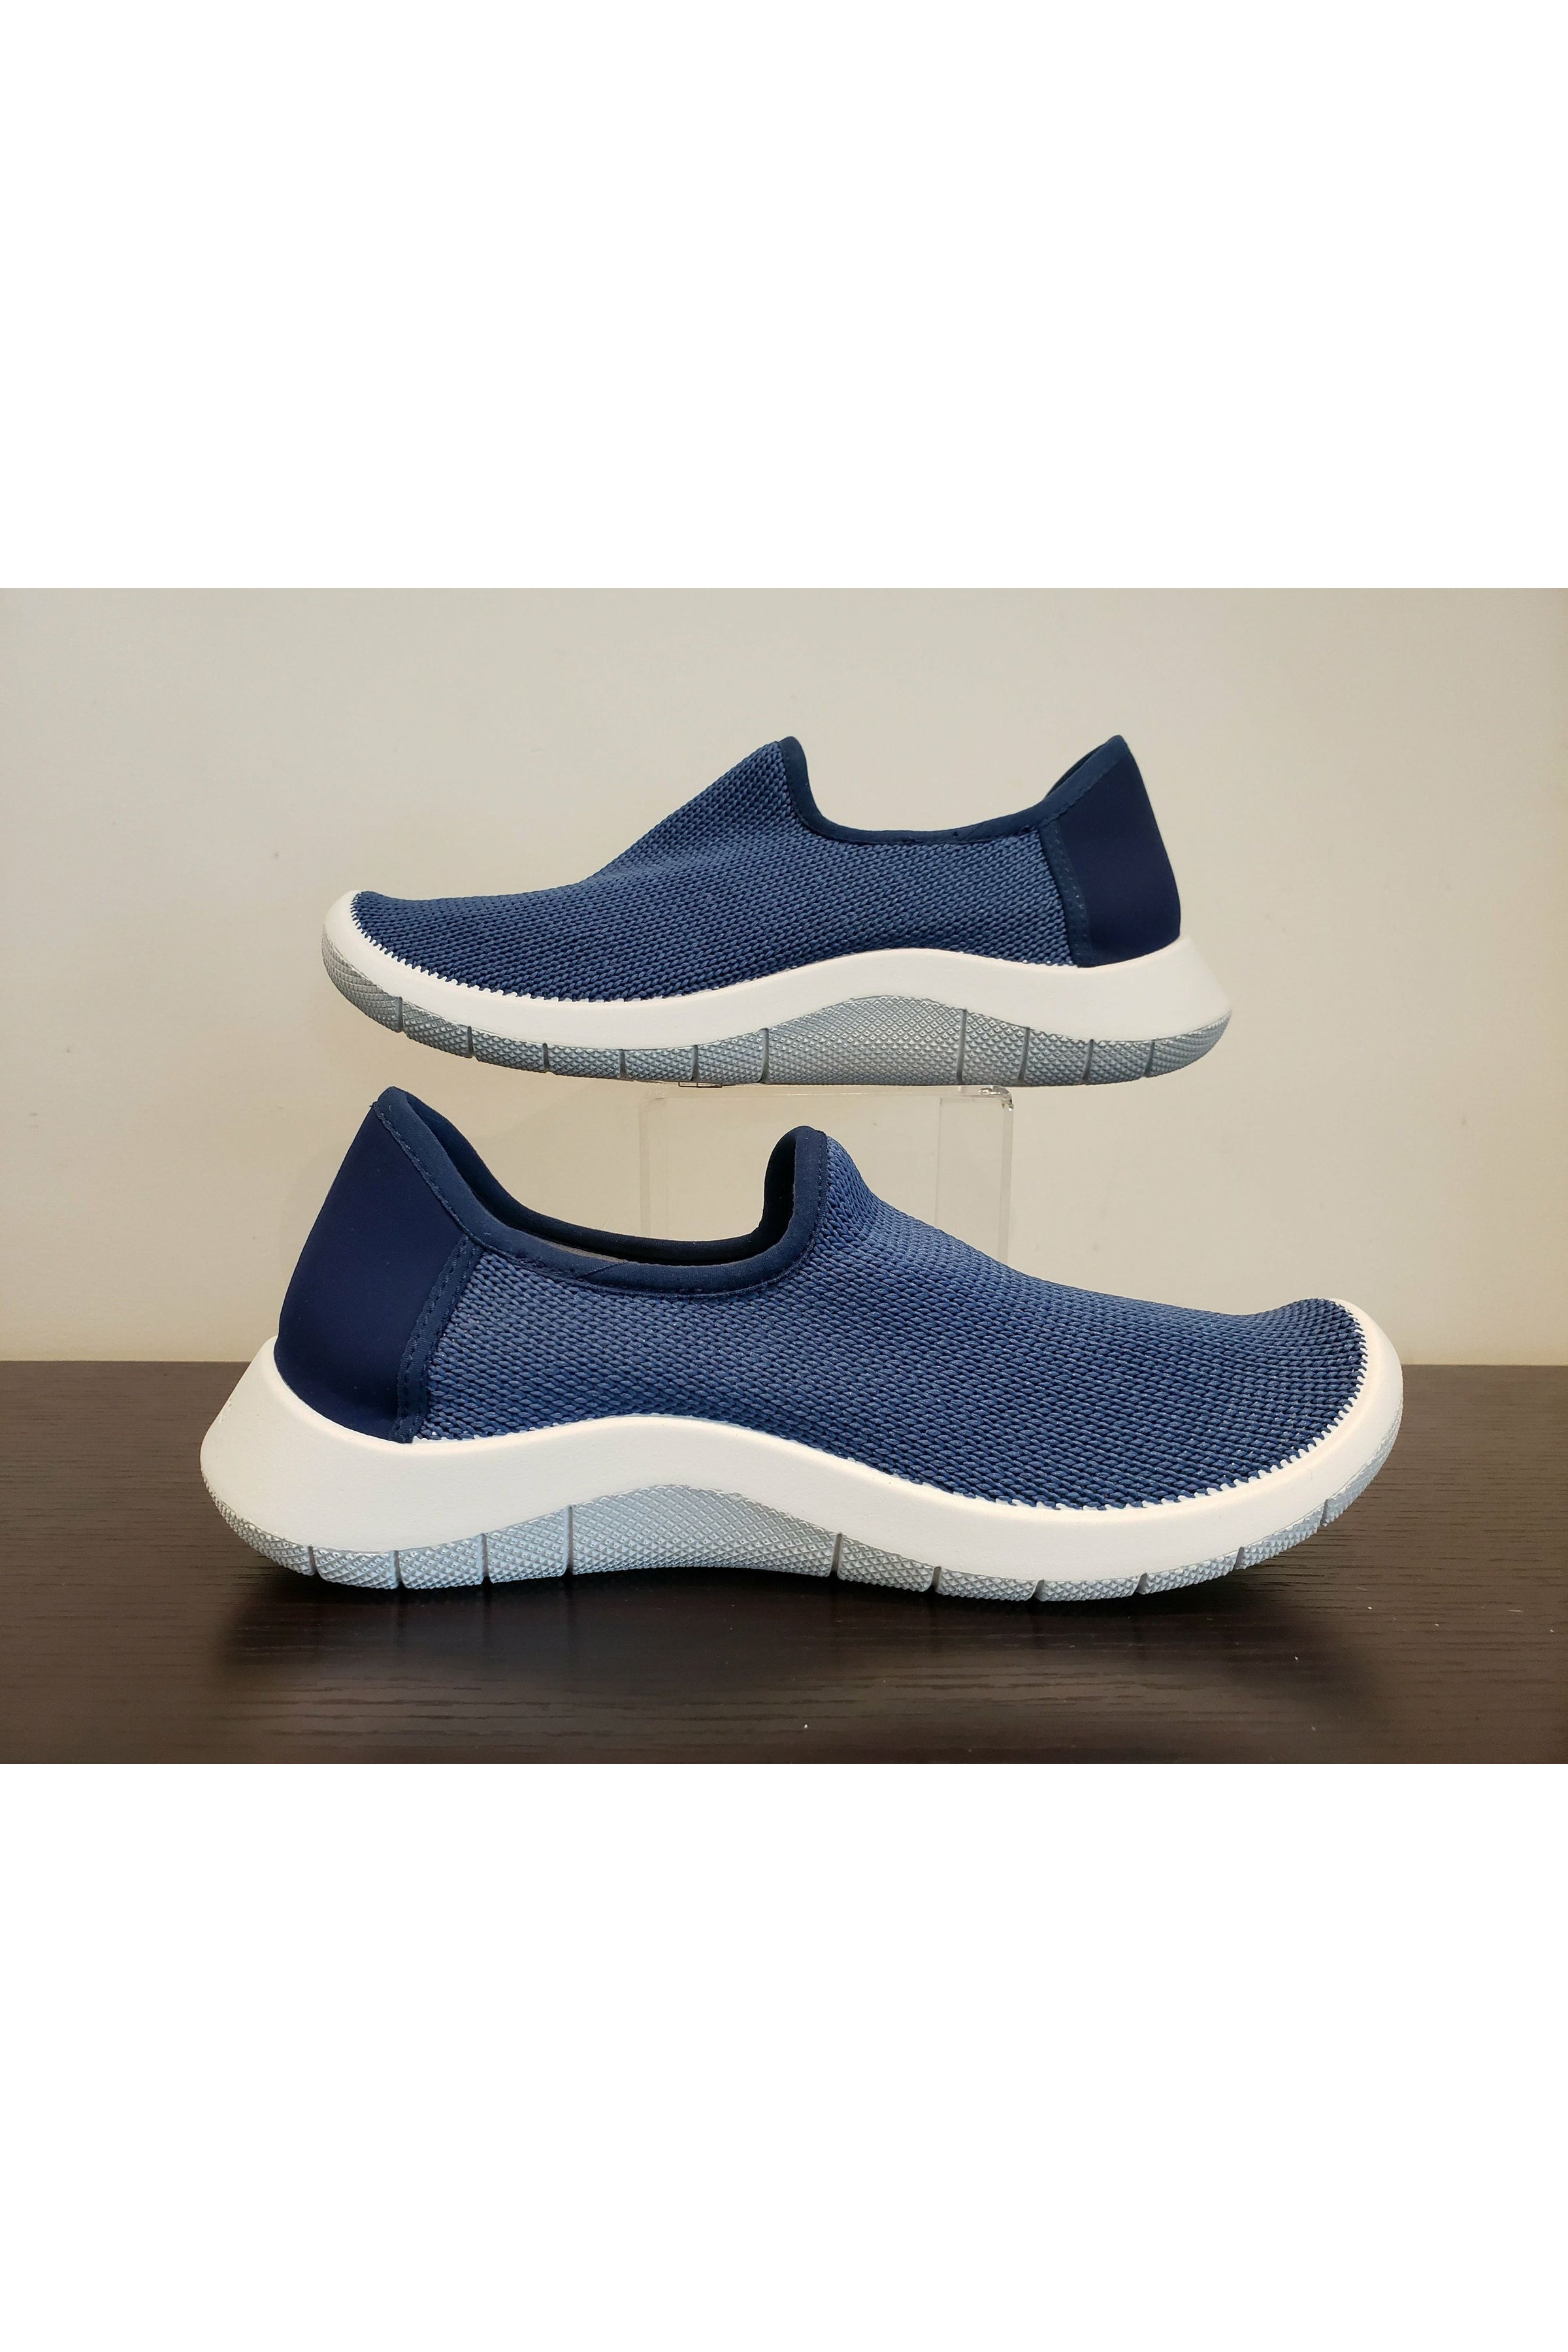 Arcopedico Slip On Shoe - Style Gaia, pair, blue